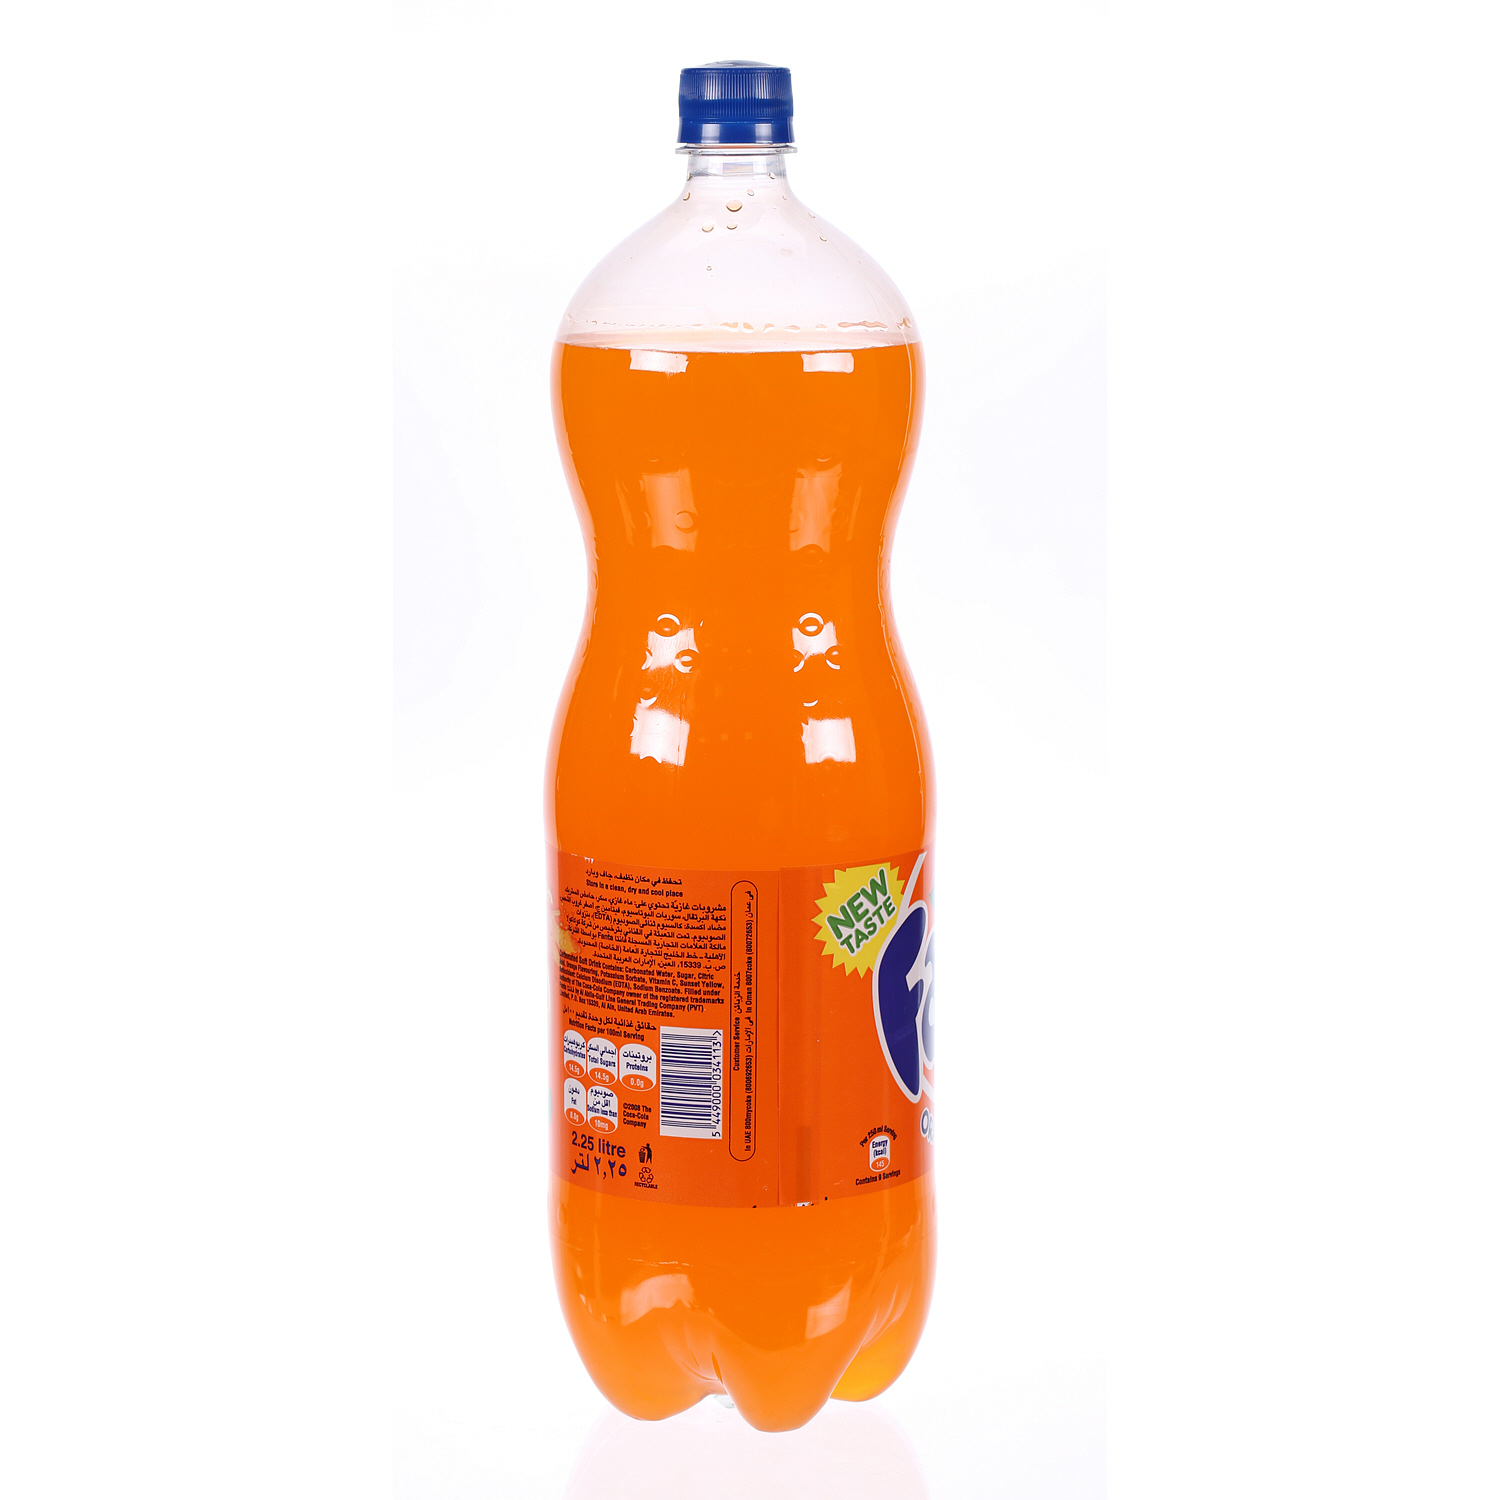 Fanta Orange 2.25Ltr